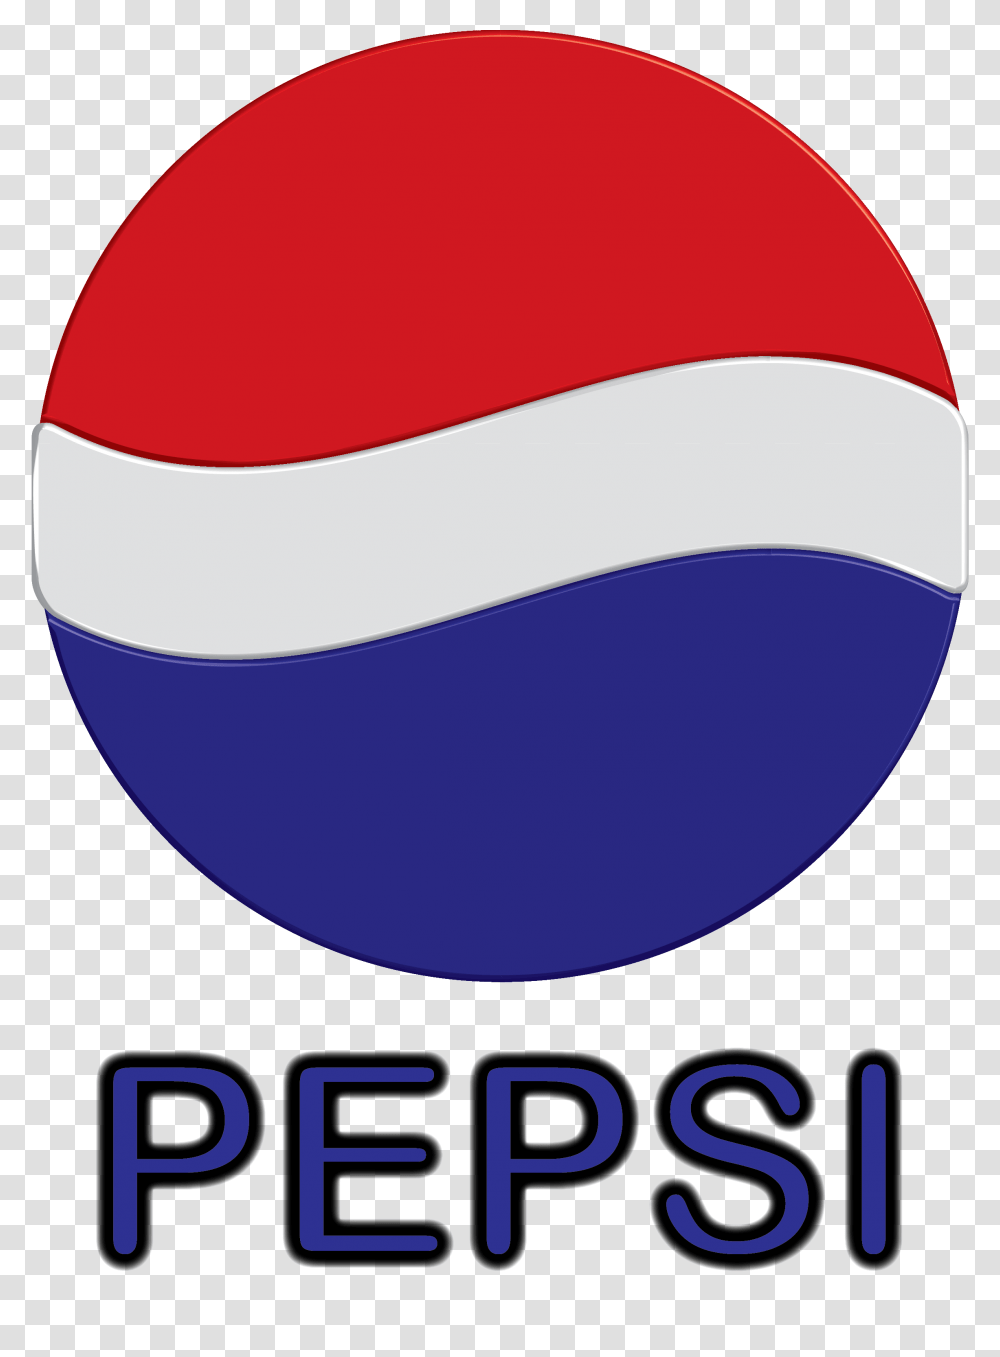 Pepsi Logo Logo Designs In Pepsi Pepsi Logo, Trademark, Baseball Cap, Hat Transparent Png